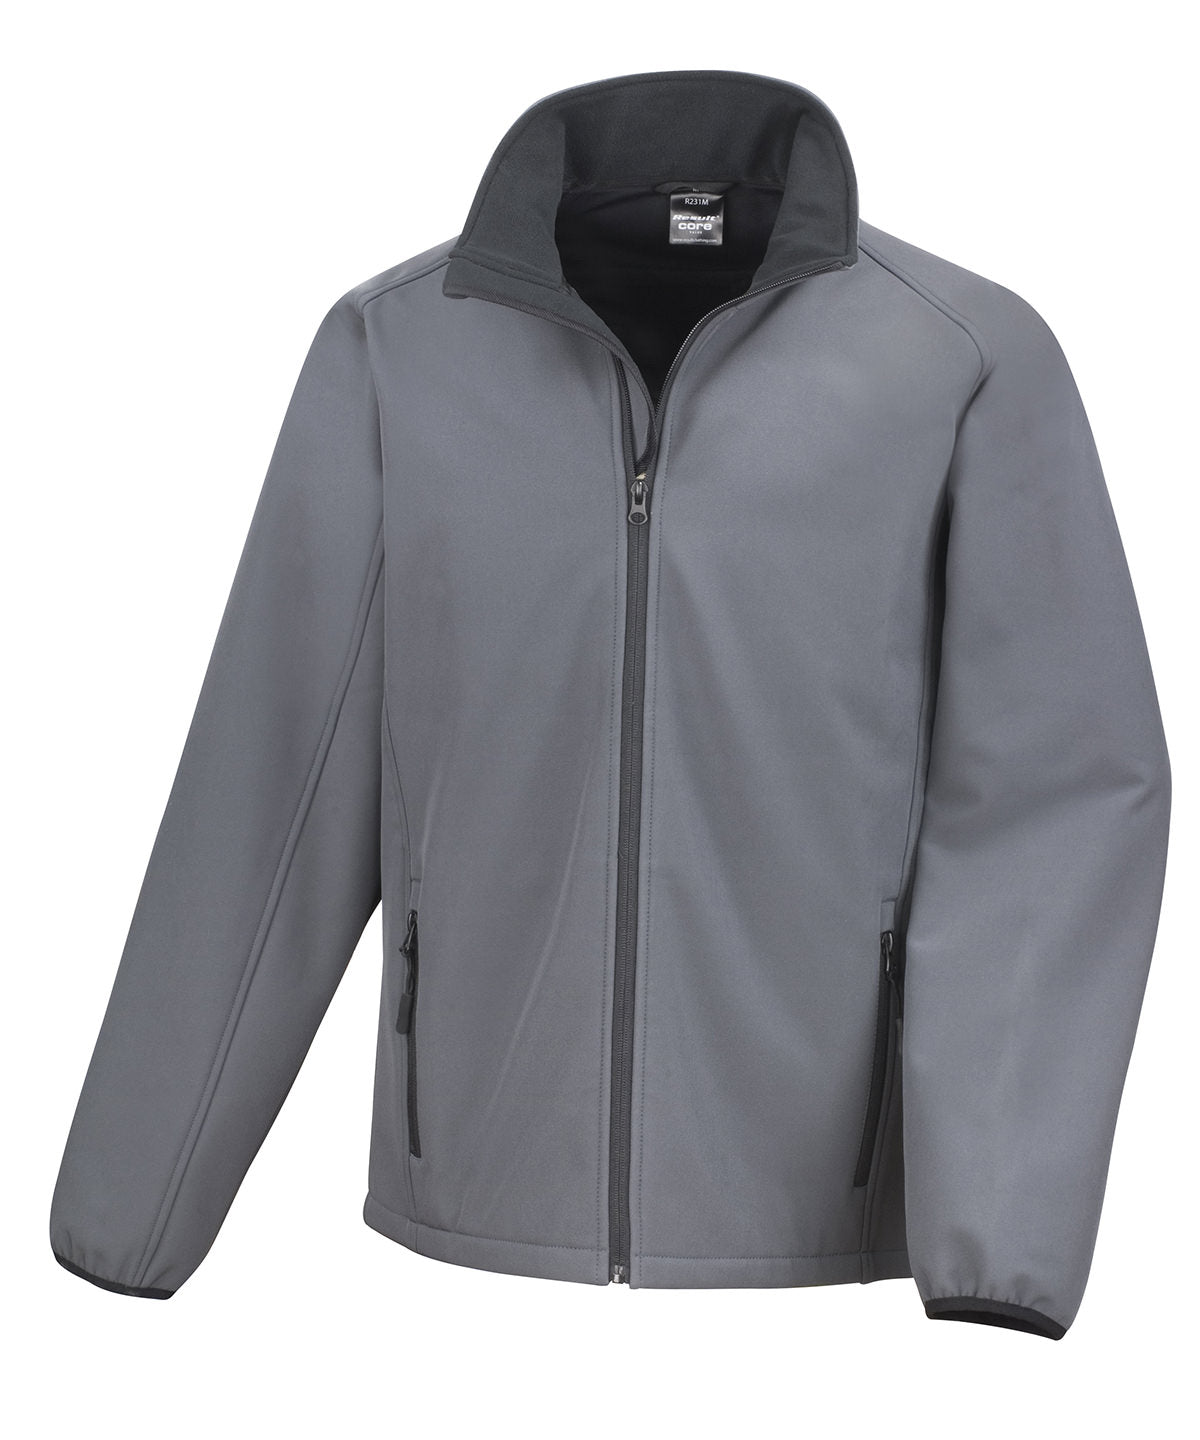 C4C Core softshell jacket - R231M